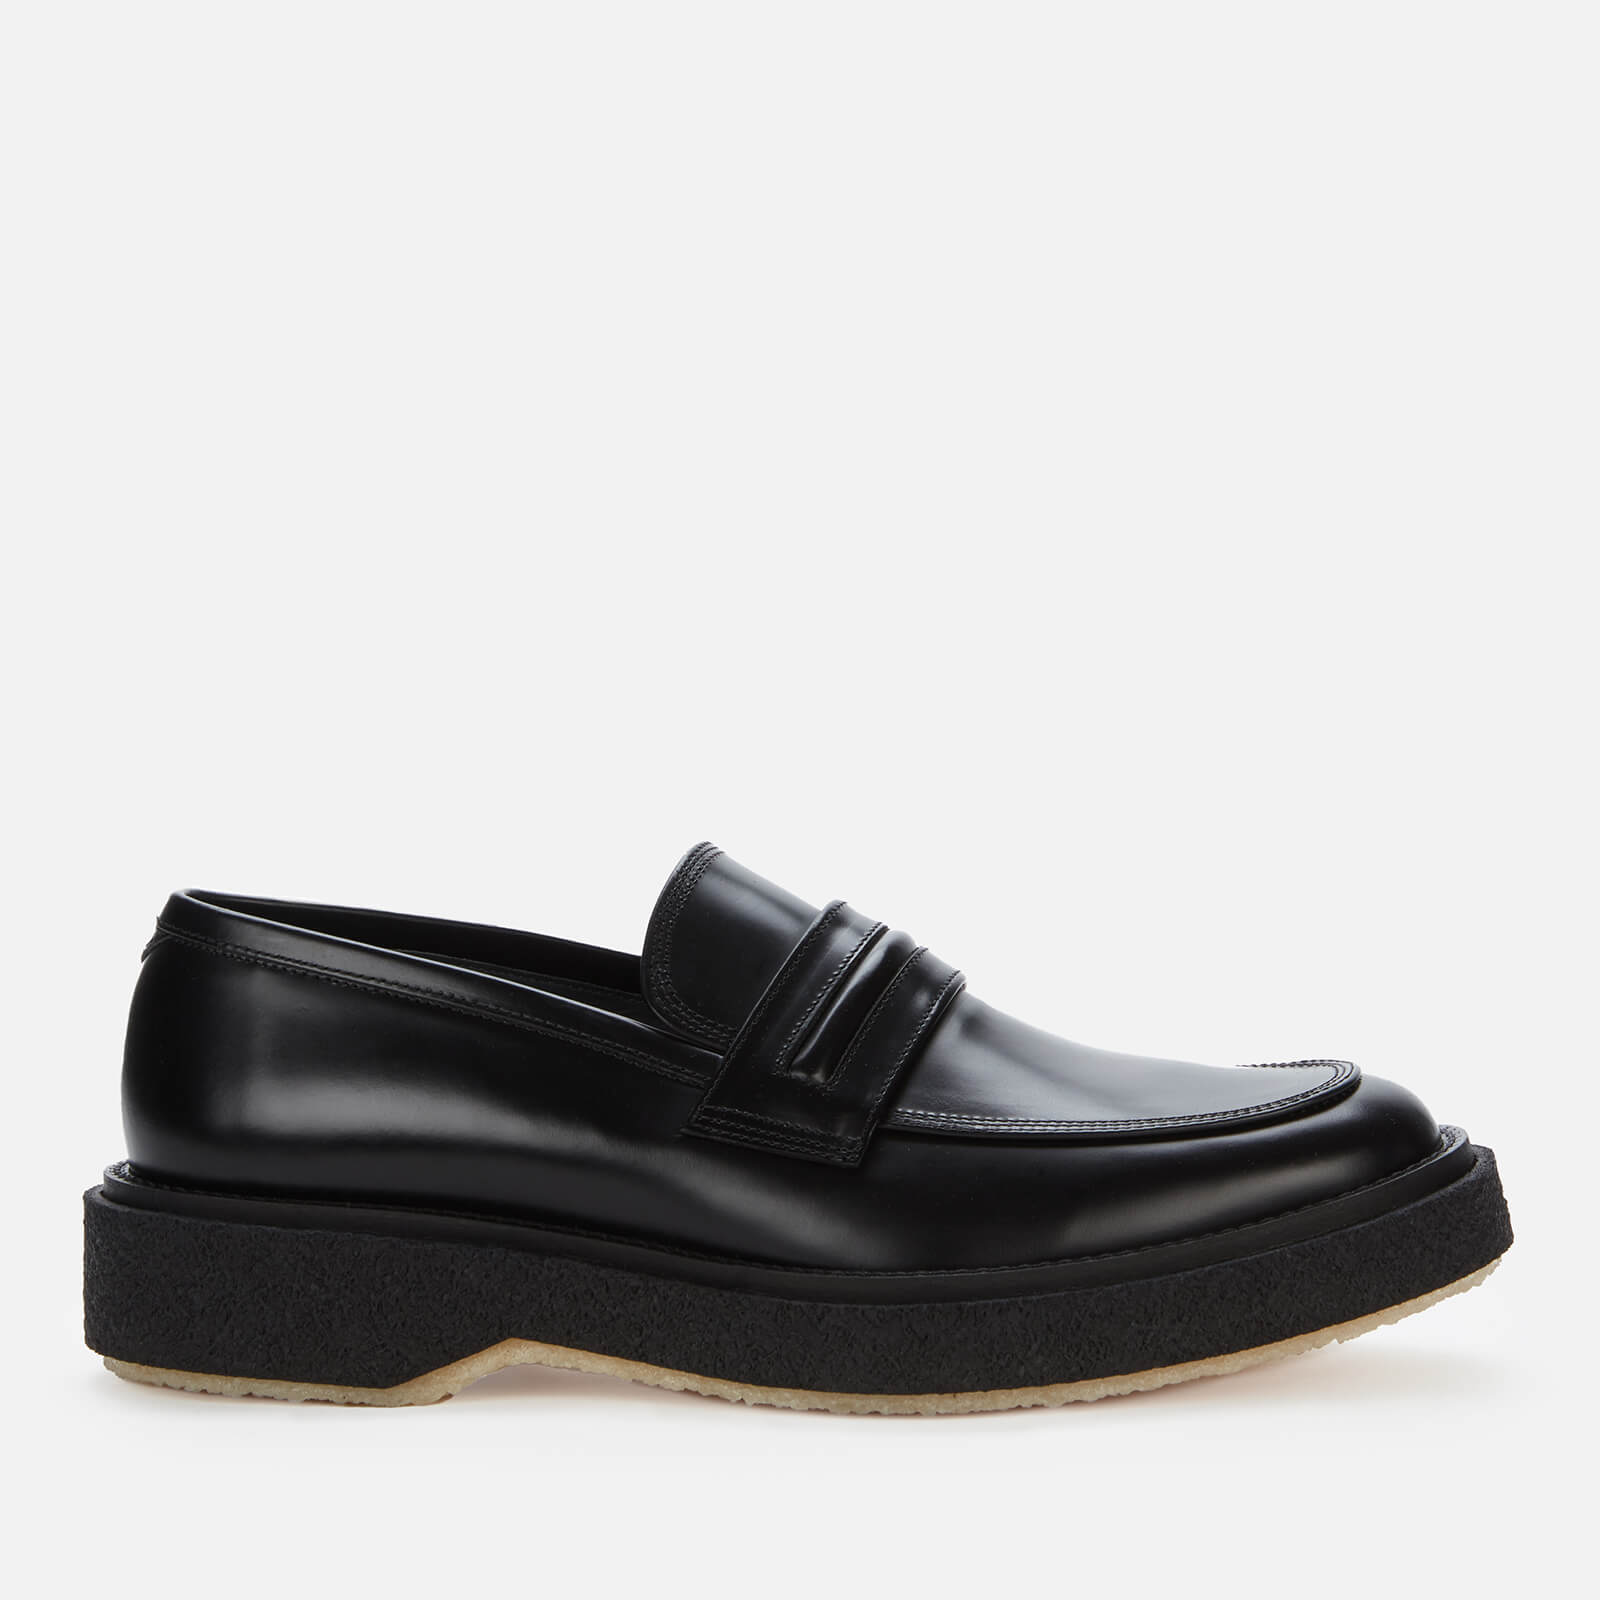 Adieu Men's Type 147 Leather Loafers - Black - UK 8